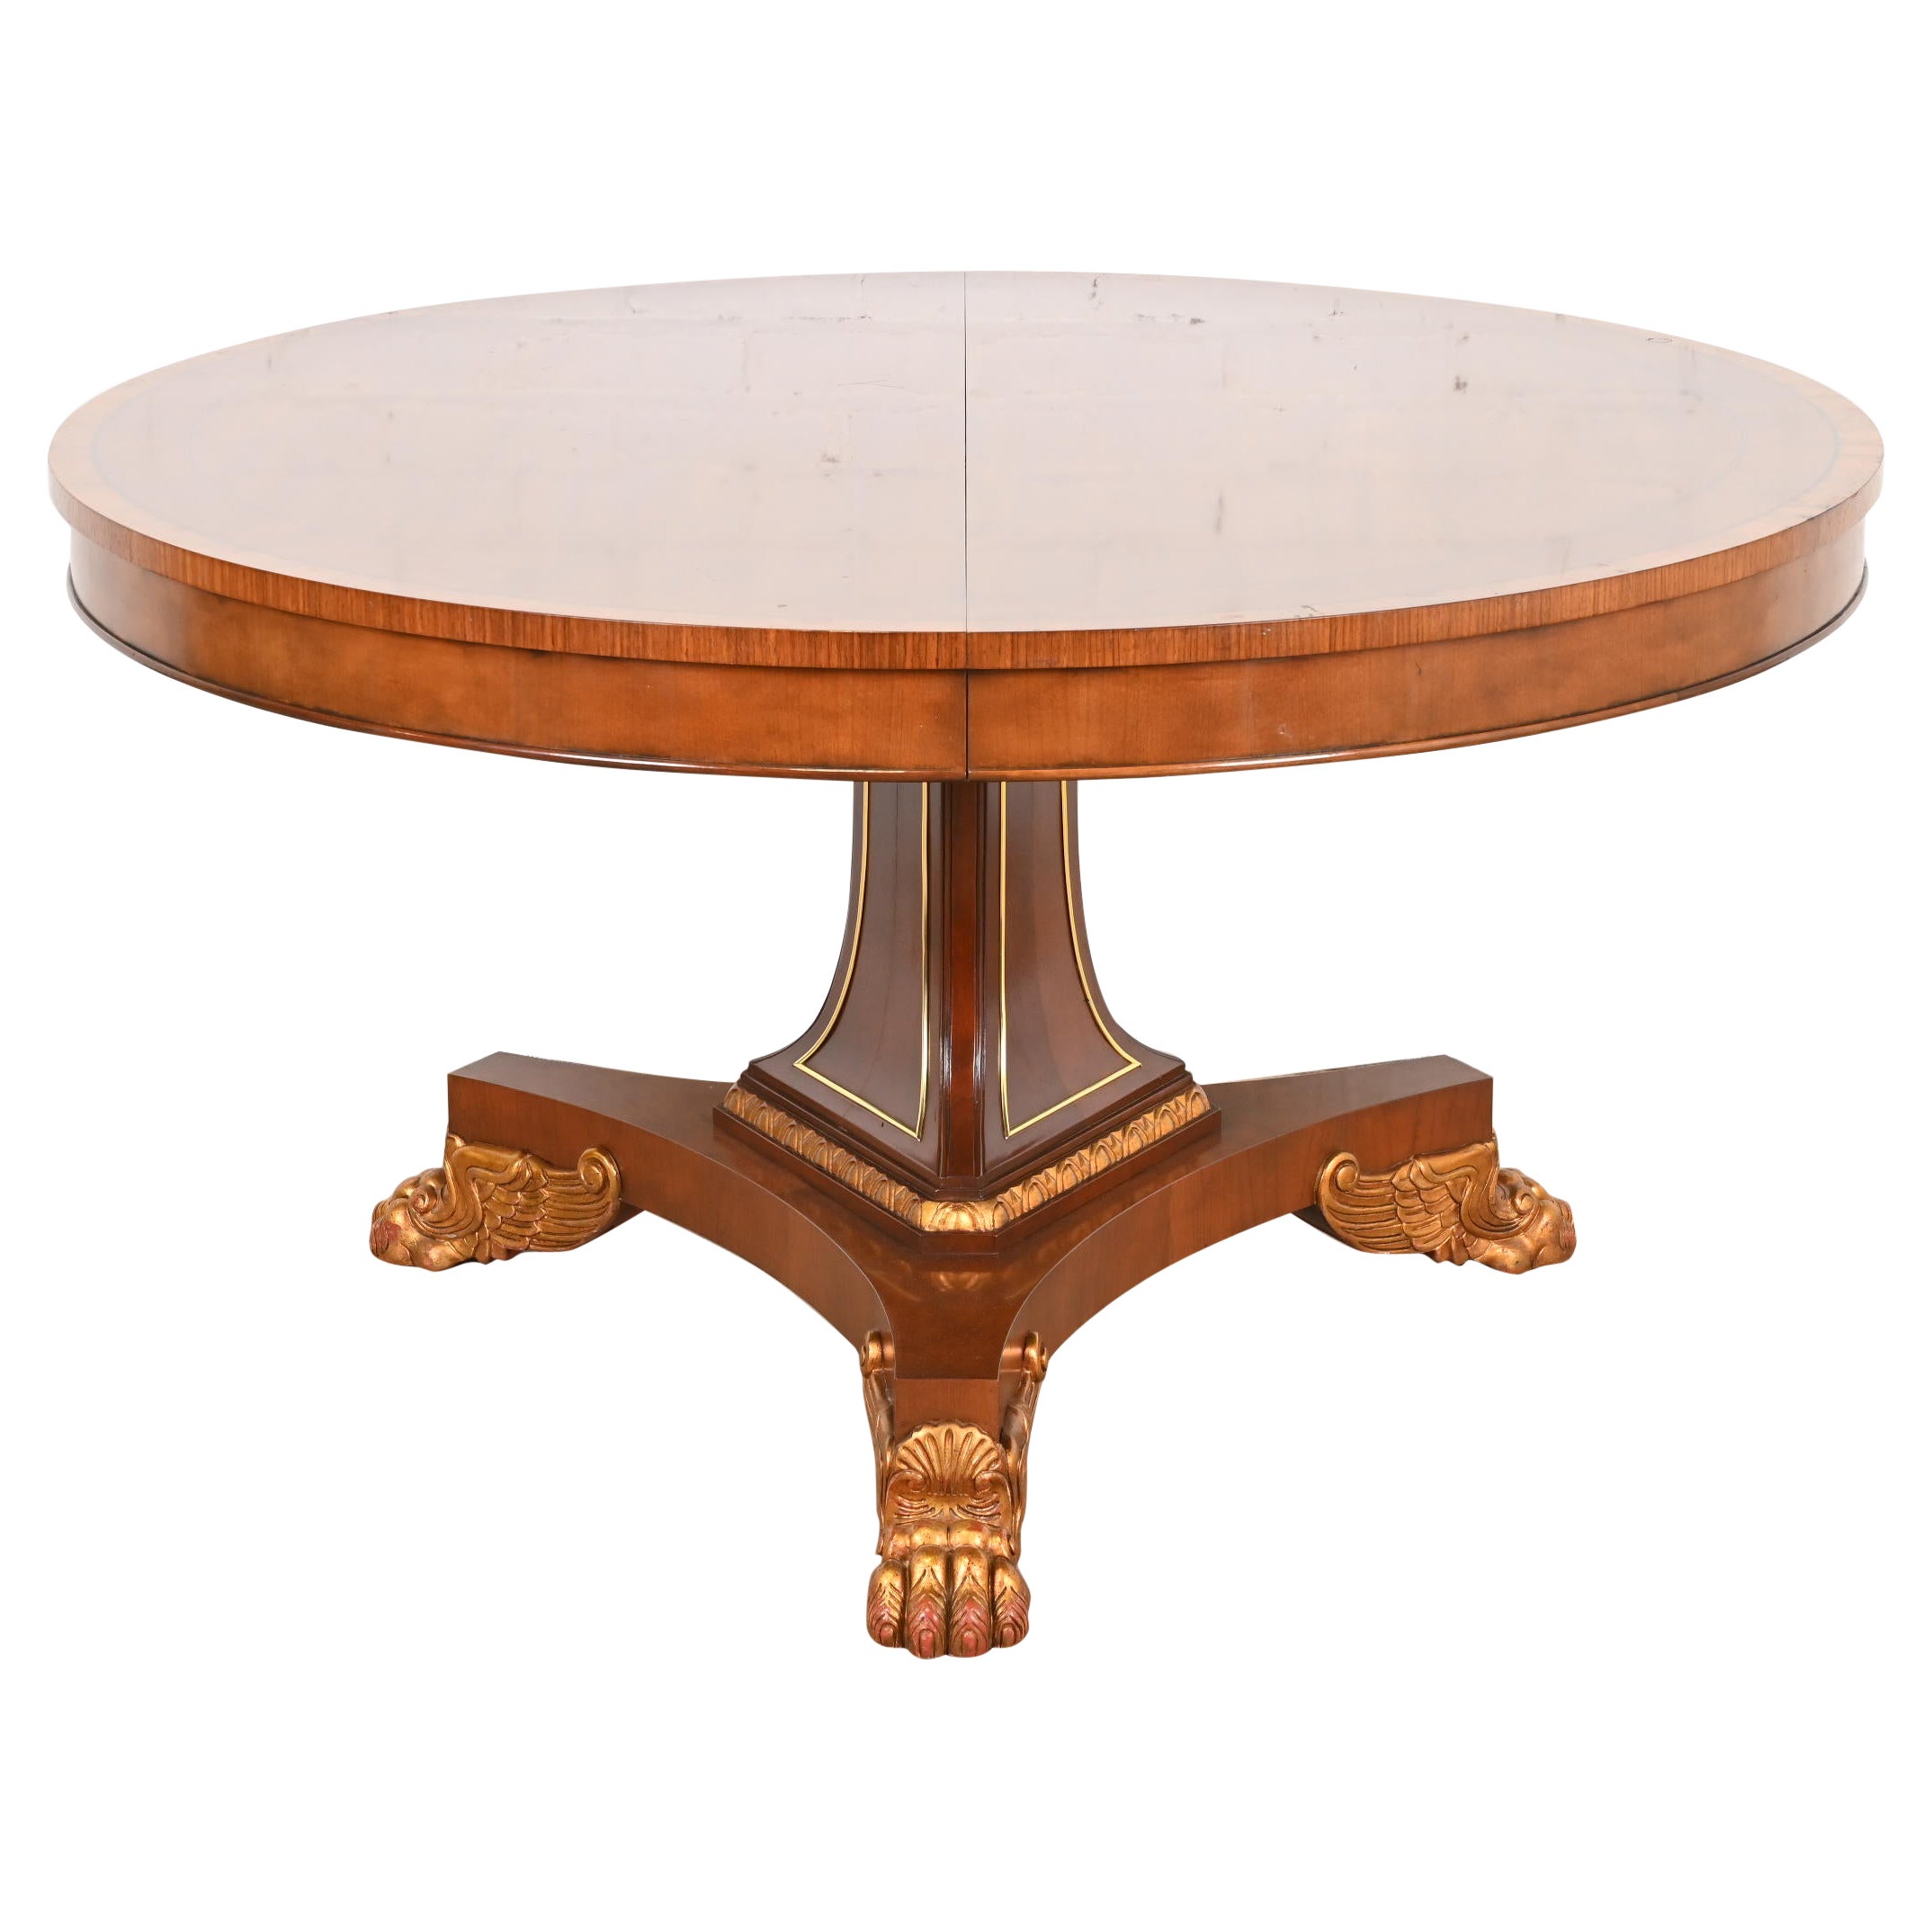 Baker Furniture Regency Paw Foot Pedestal Dining Table or Center Table